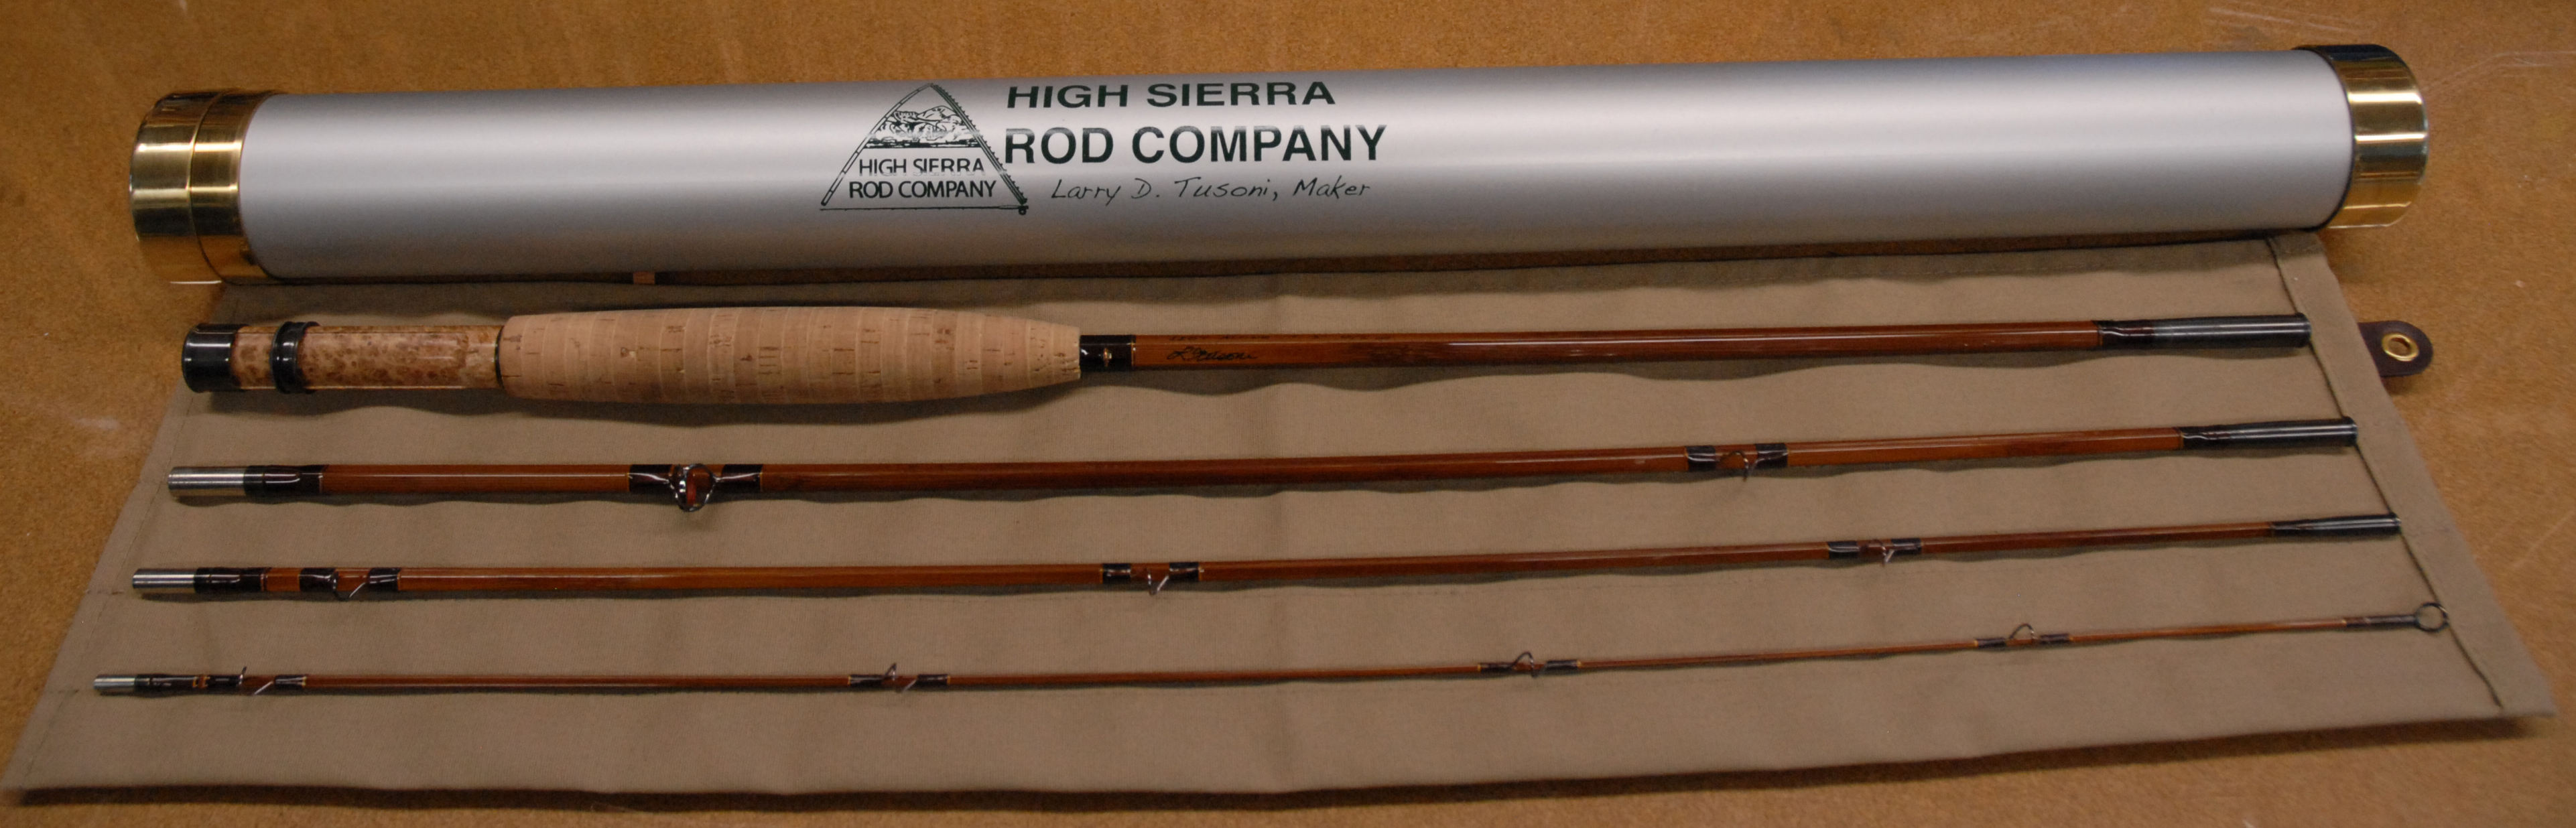 High Sierra Rod Company - Home Page